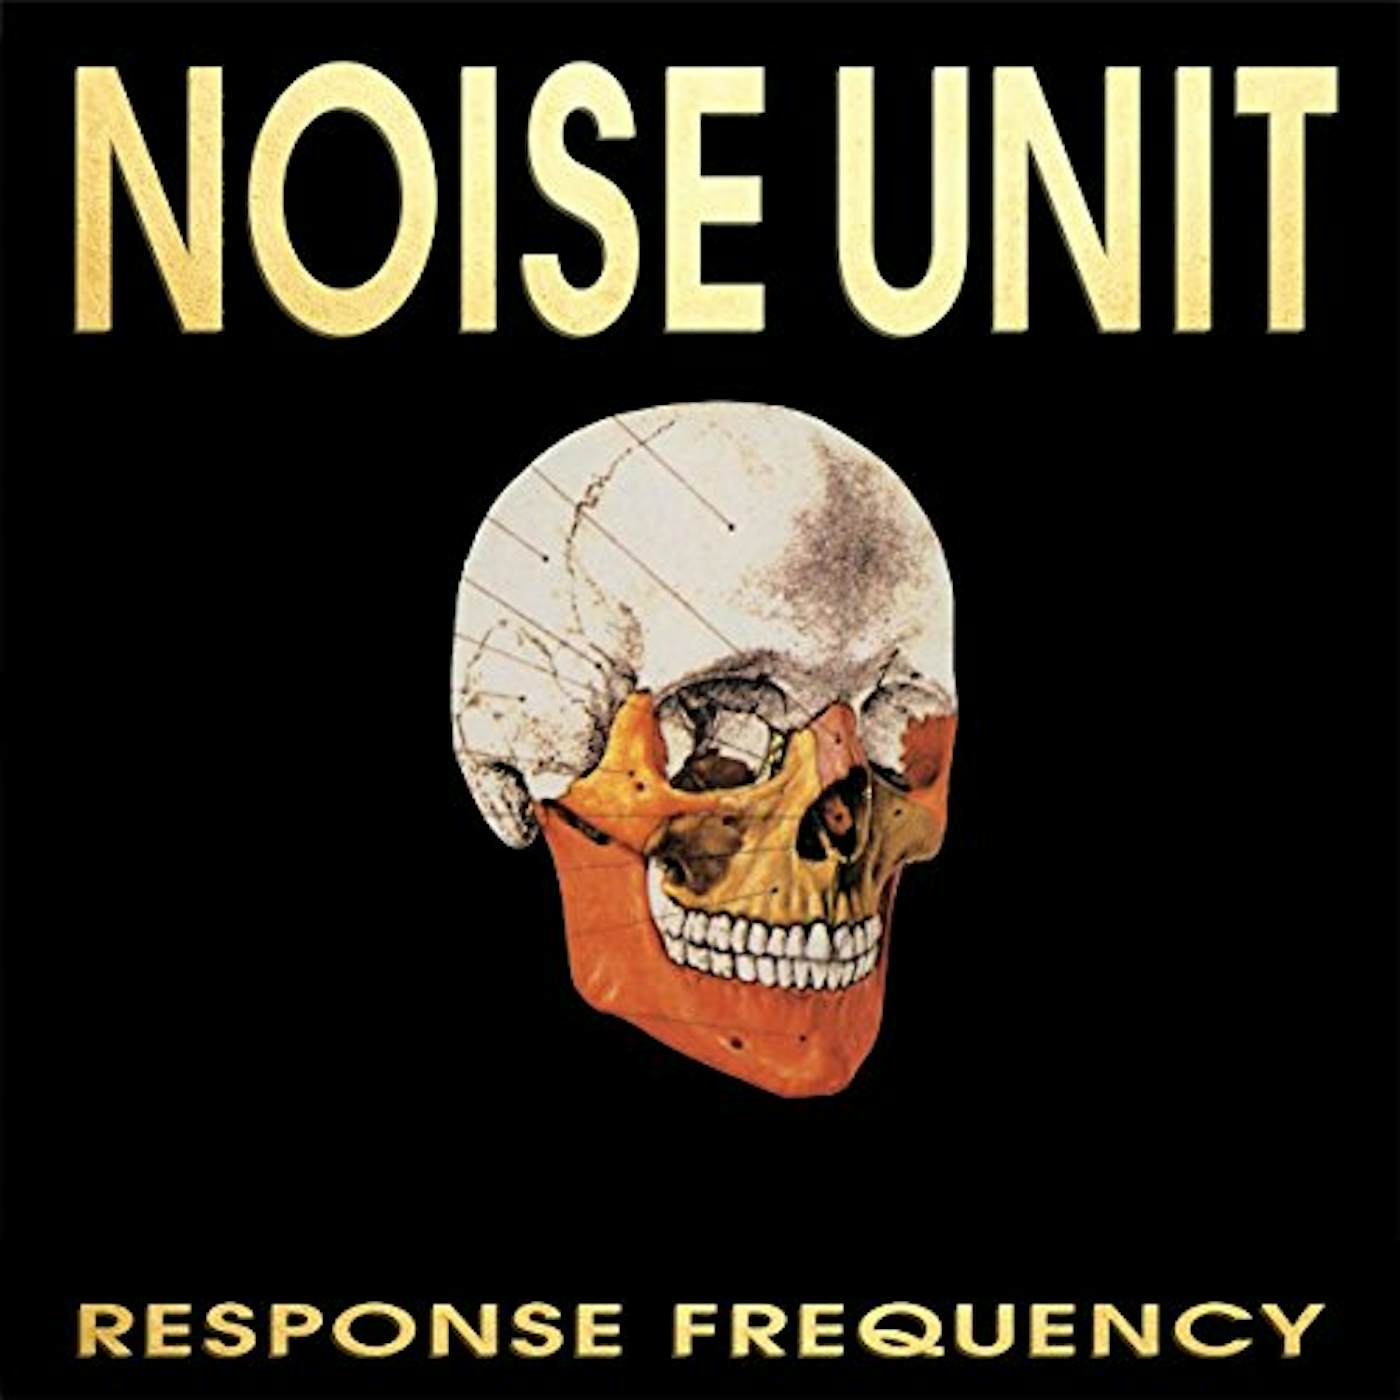 Noise Unit Response Frequency Vinyl Record